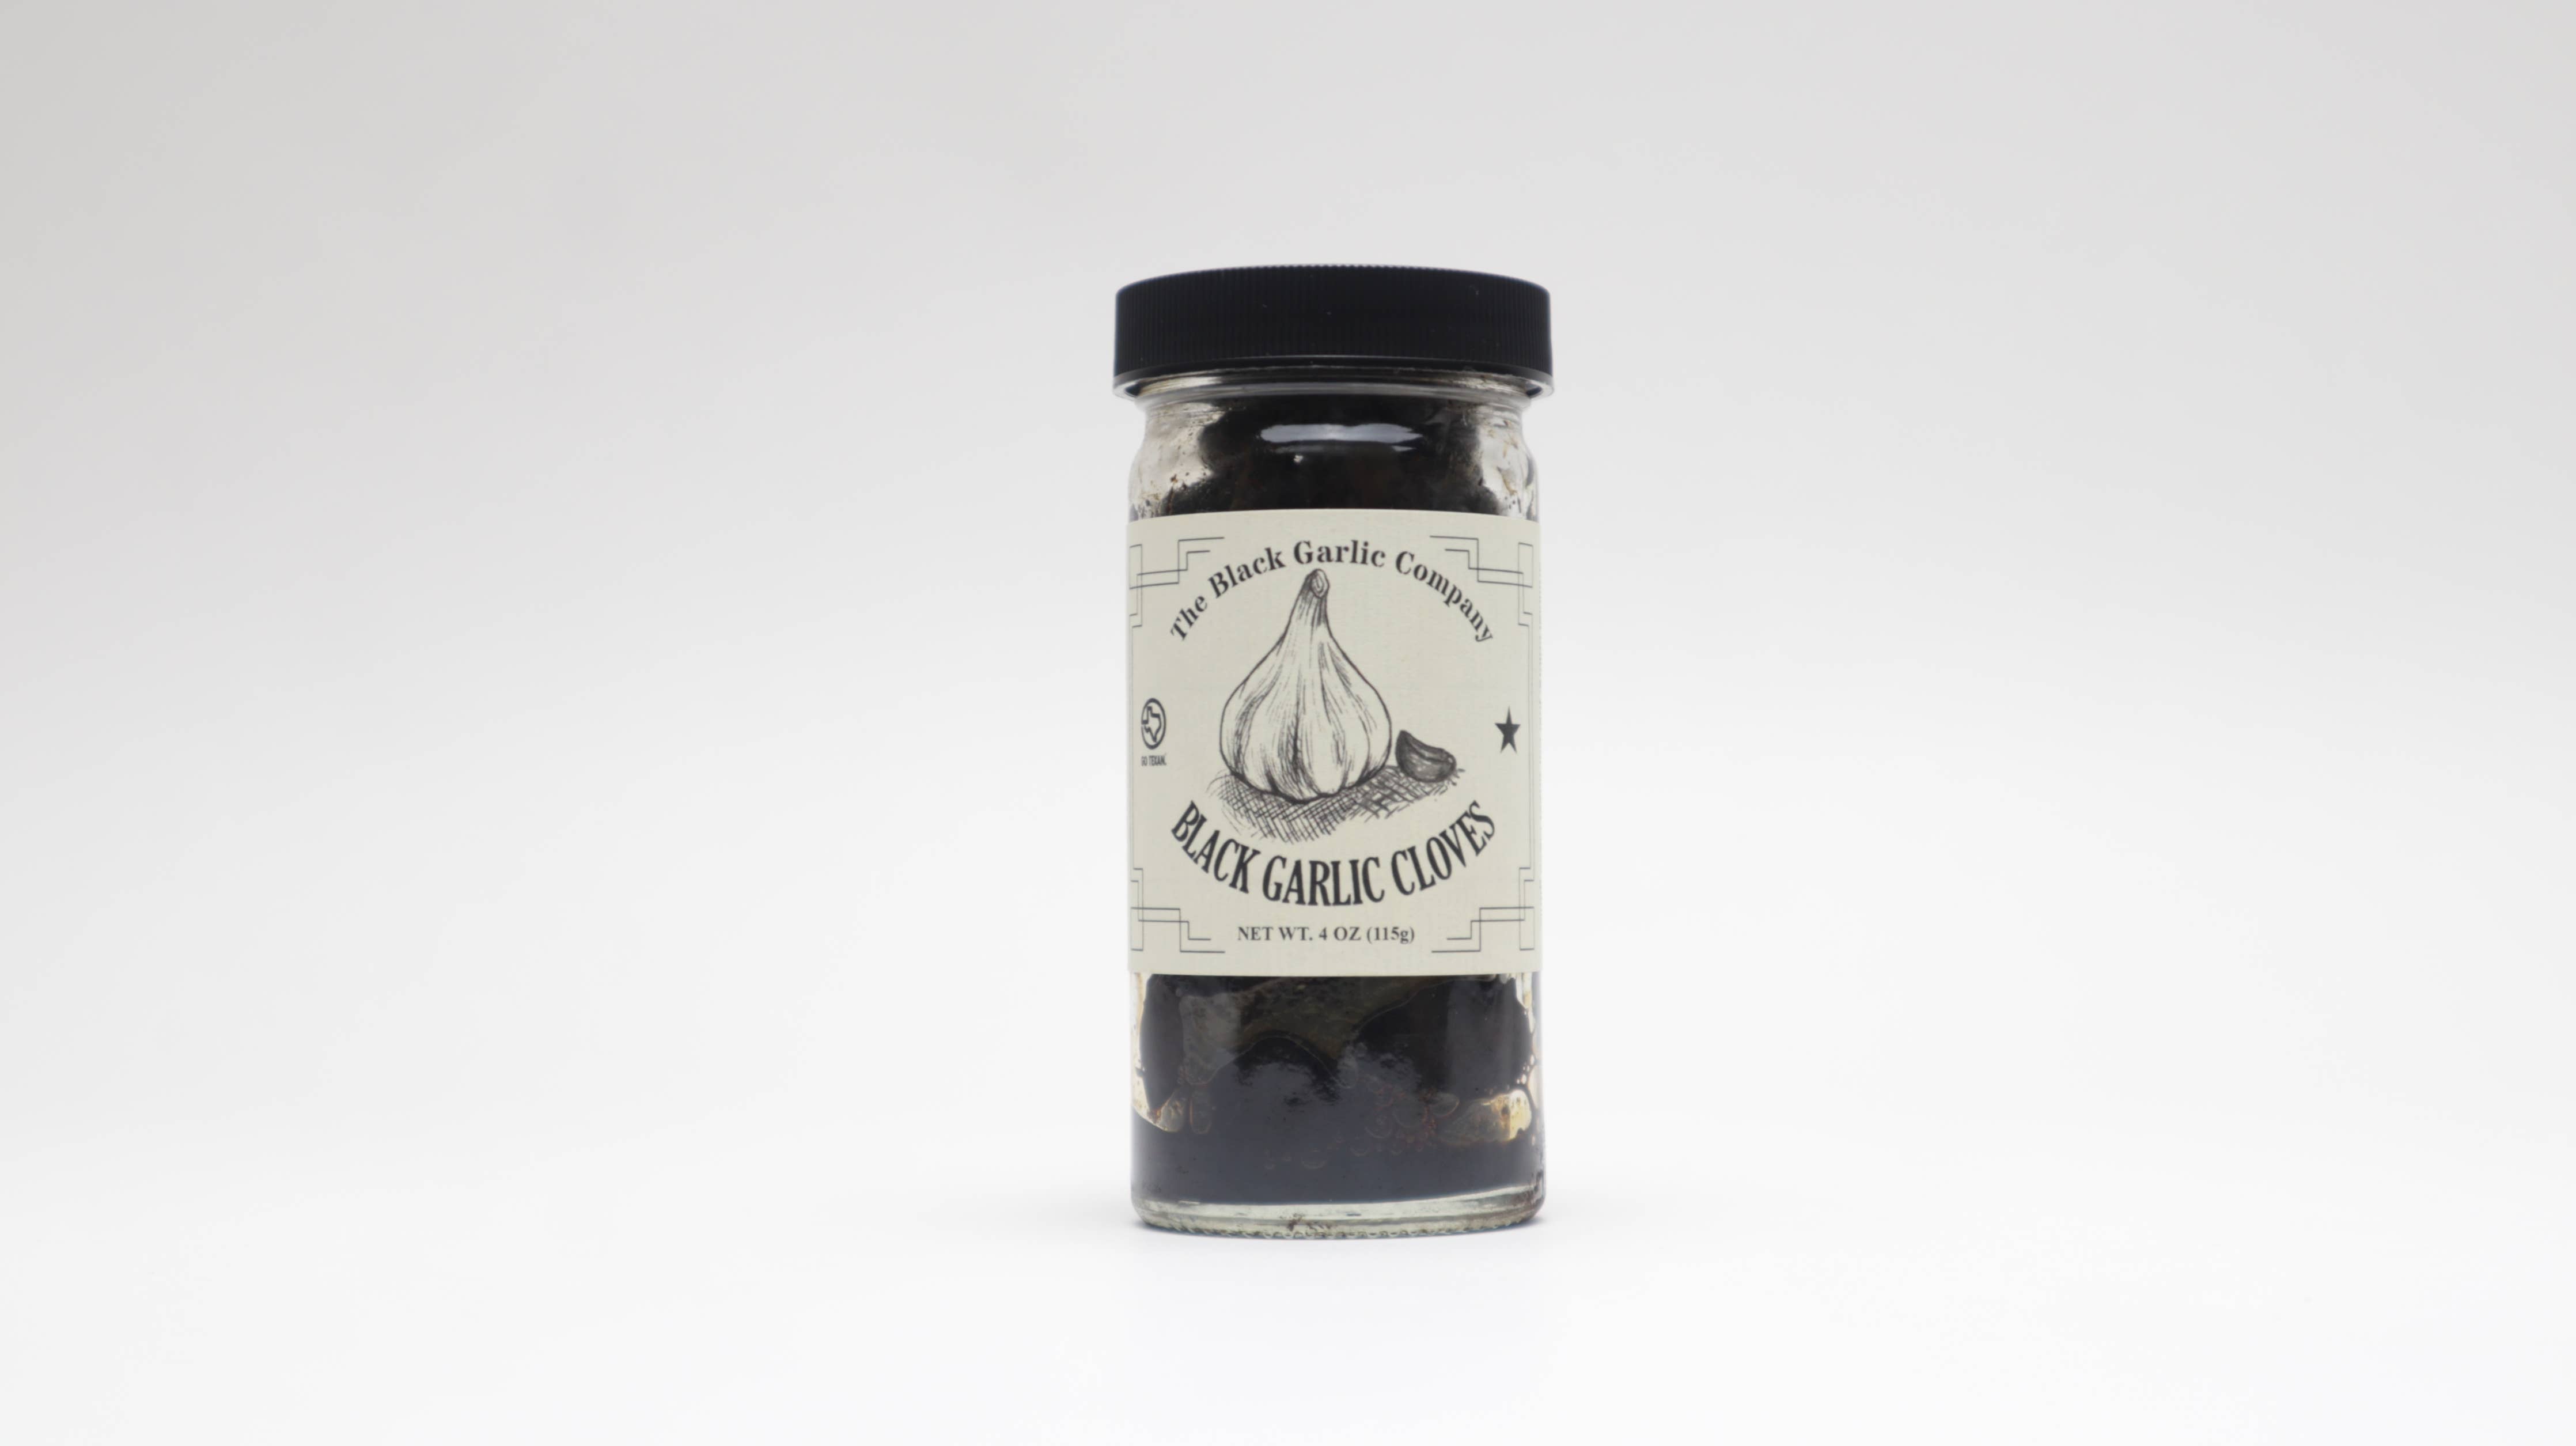 The Black Garlic Company - Black Garlic Cloves 4 oz Jar